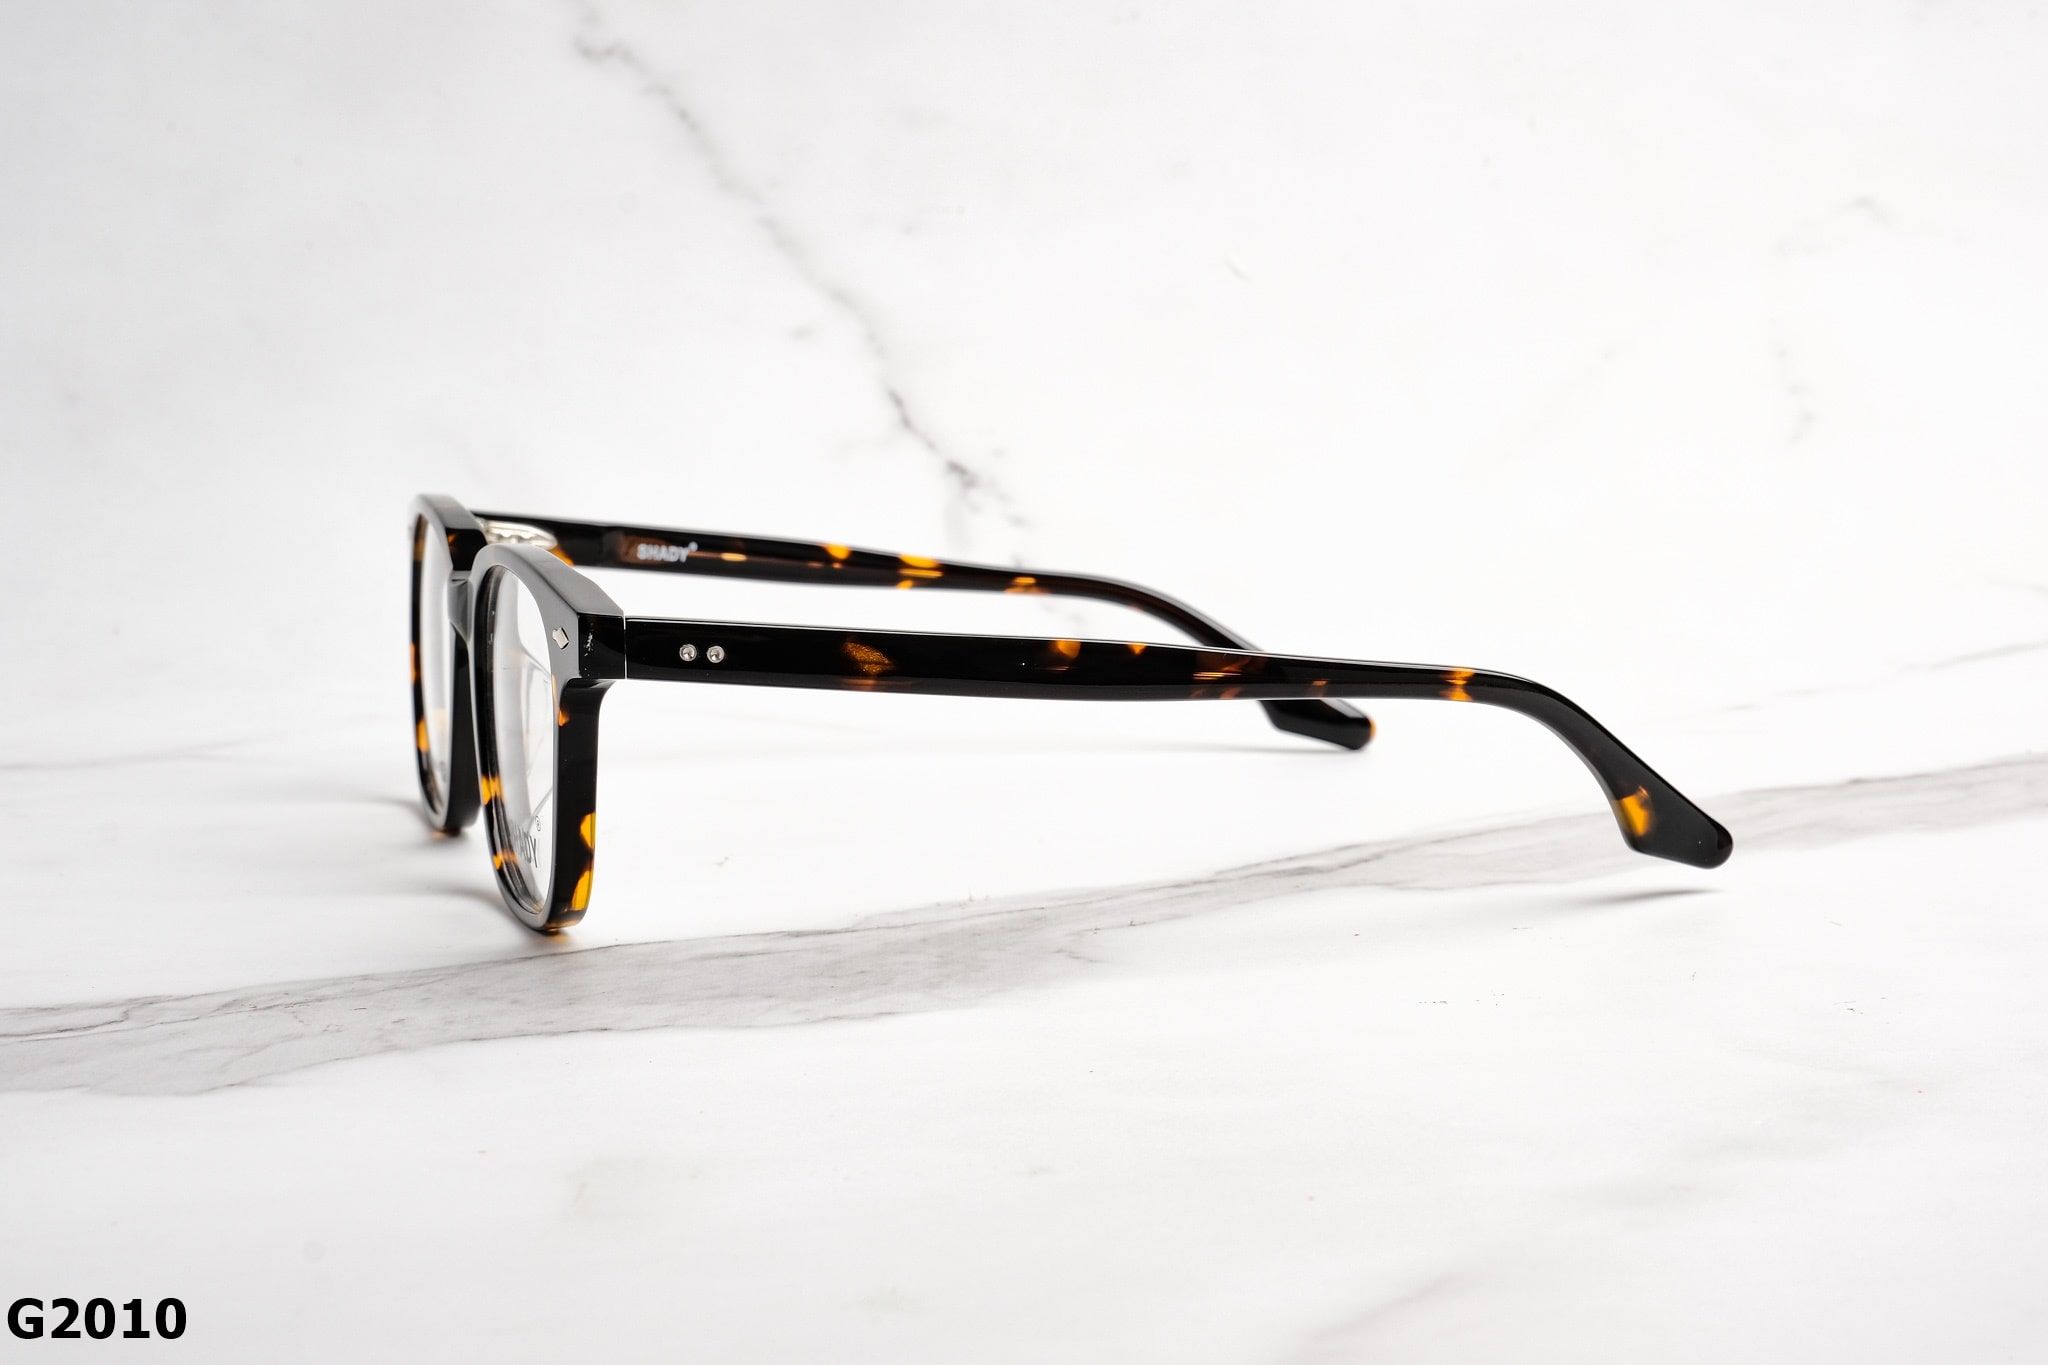  SHADY Eyewear - Glasses - G2010 